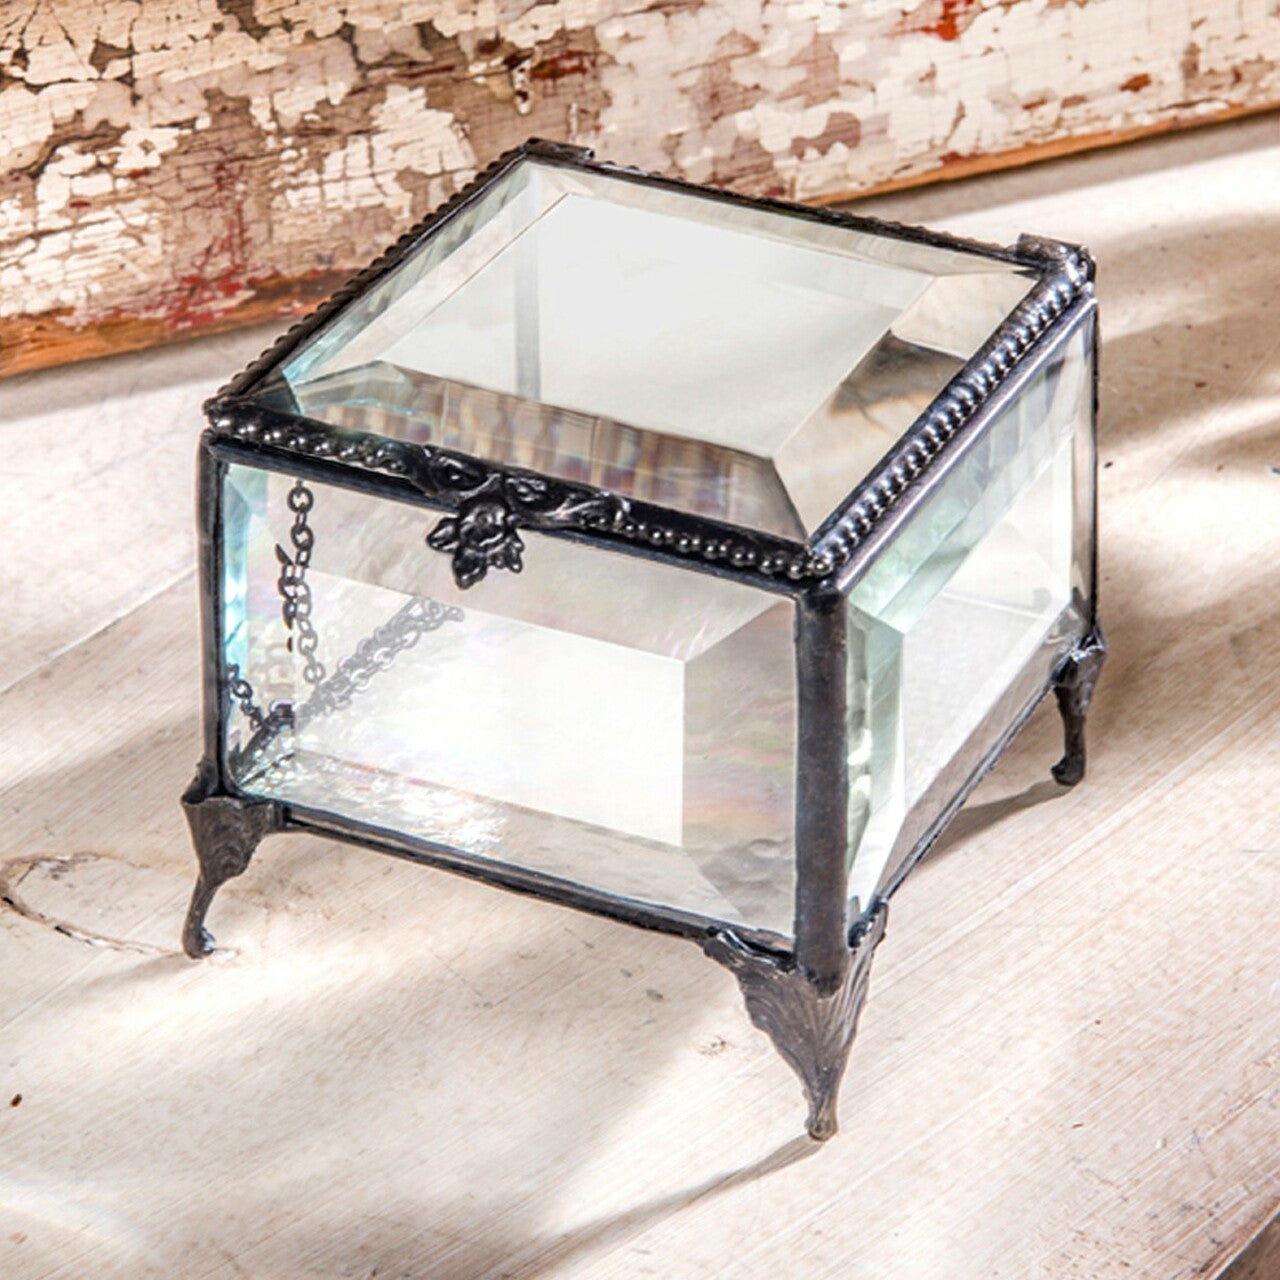 Glass Keepsake Box